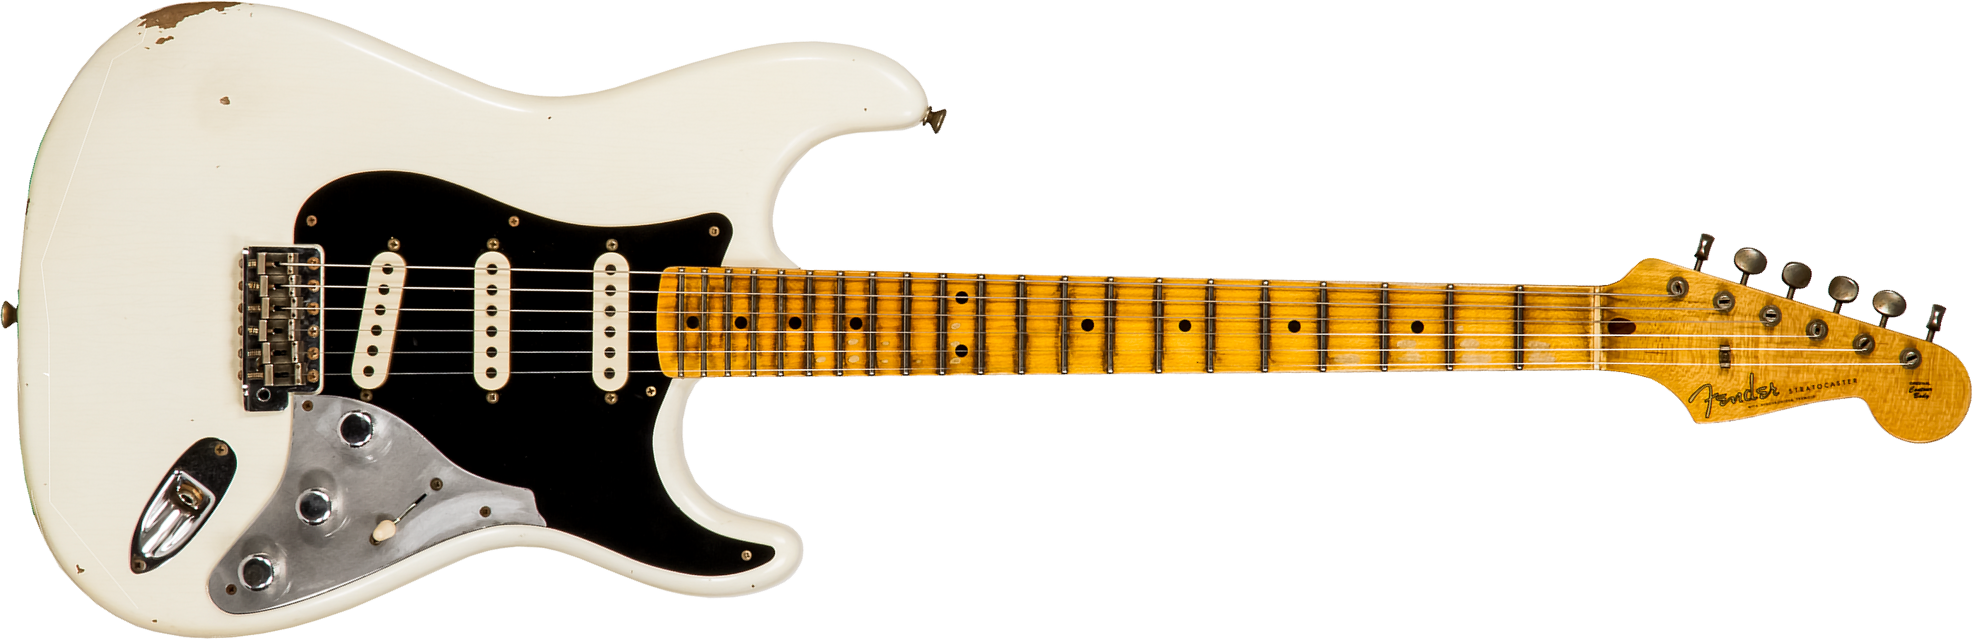 Fender Custom Shop Strat Poblano Ii 3s Trem Mn #cz555378 - Relic Olympic White - Guitare Électrique Forme Str - Main picture